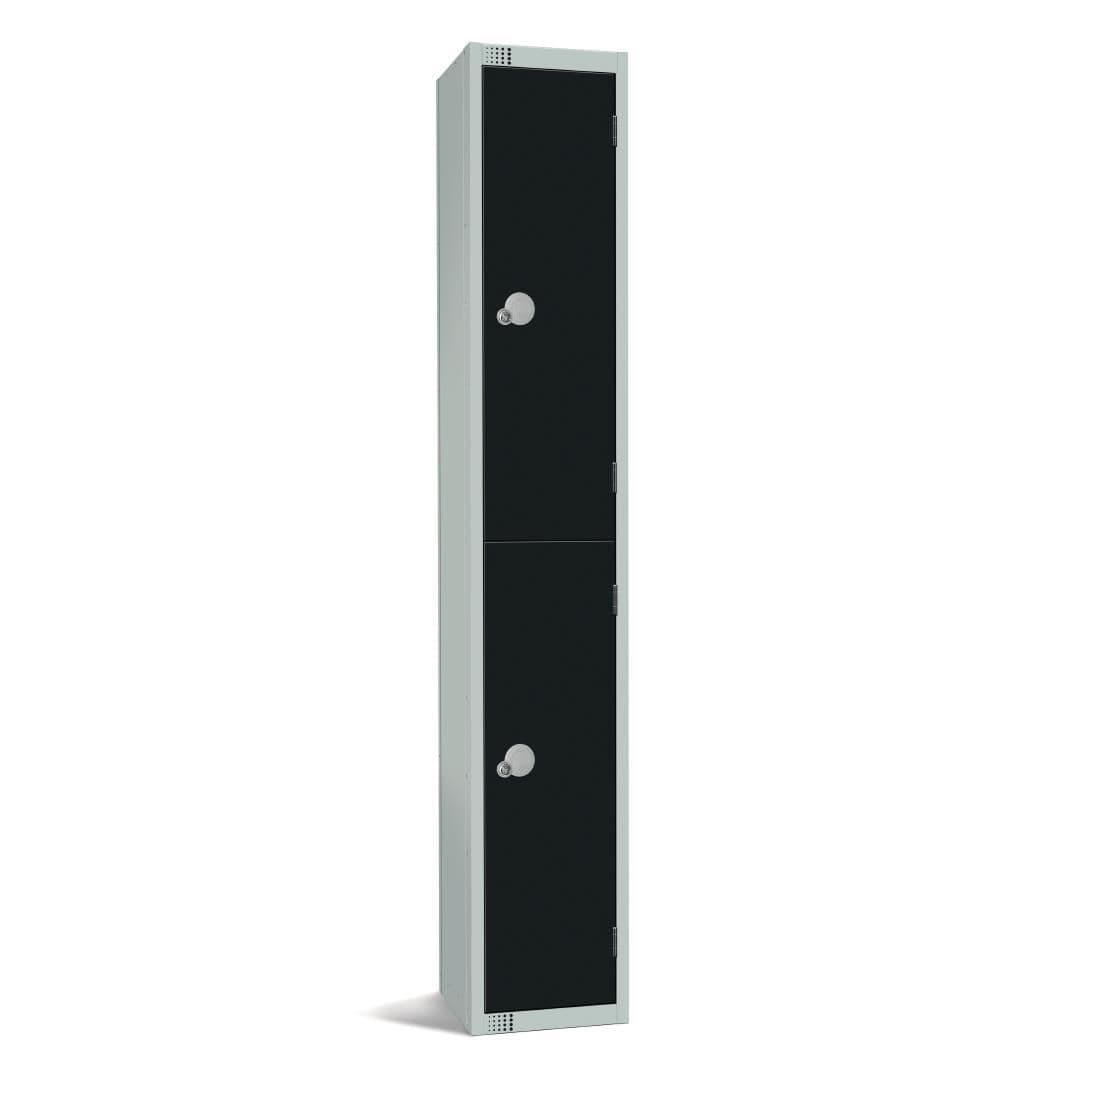 GR671-CL Elite Double Door Manual Combination Locker Locker Black JD Catering Equipment Solutions Ltd